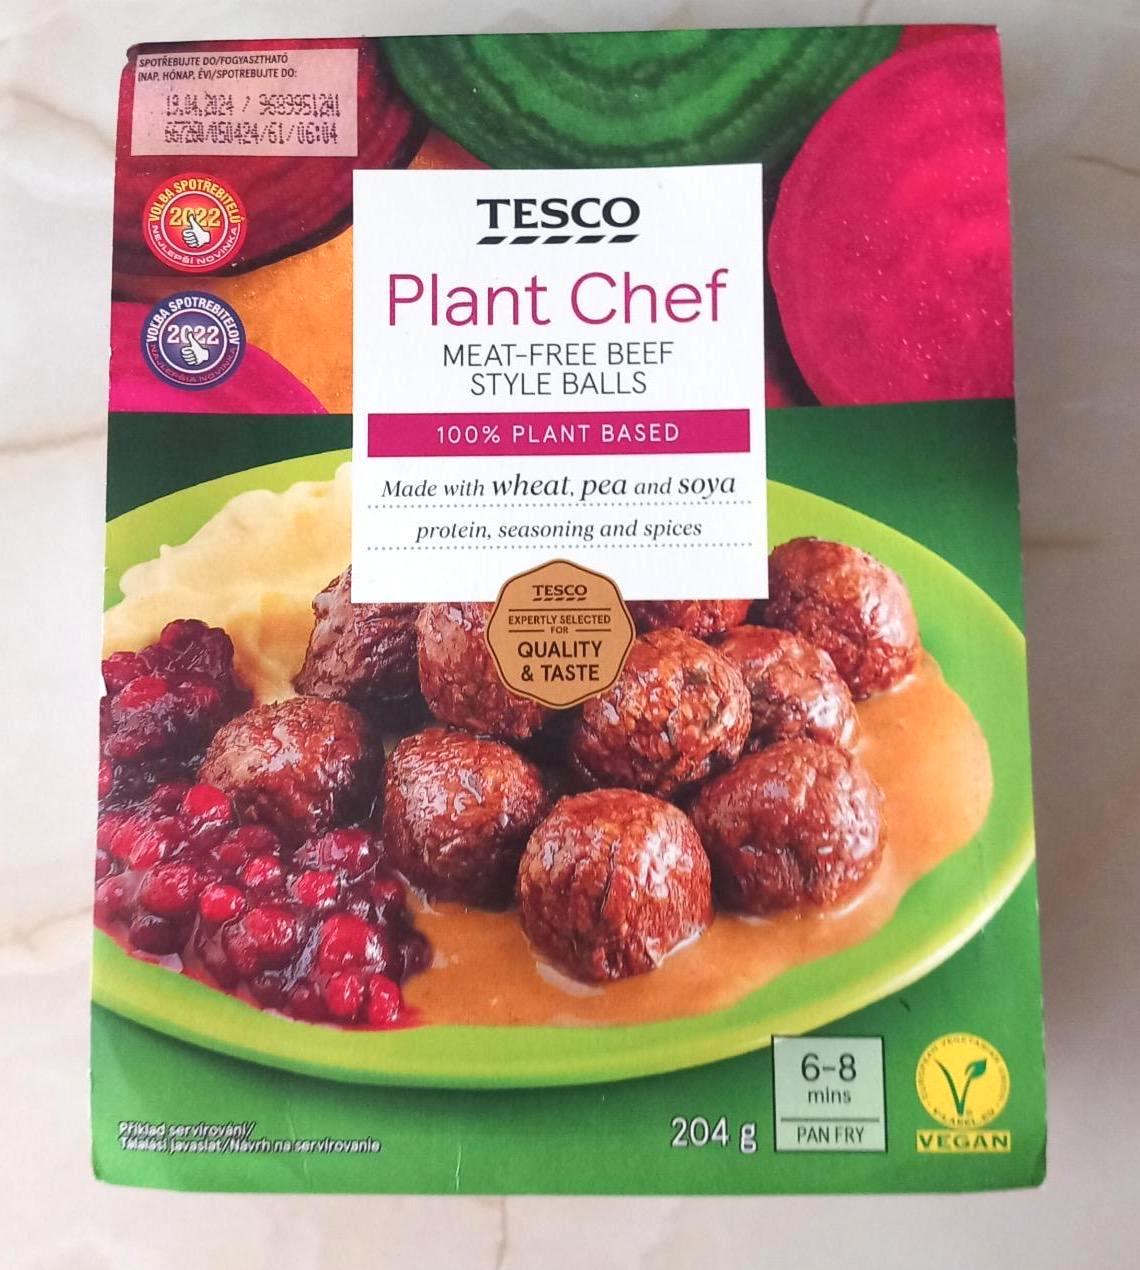 Képek - Plant Chef meat-free beef style balls Tesco